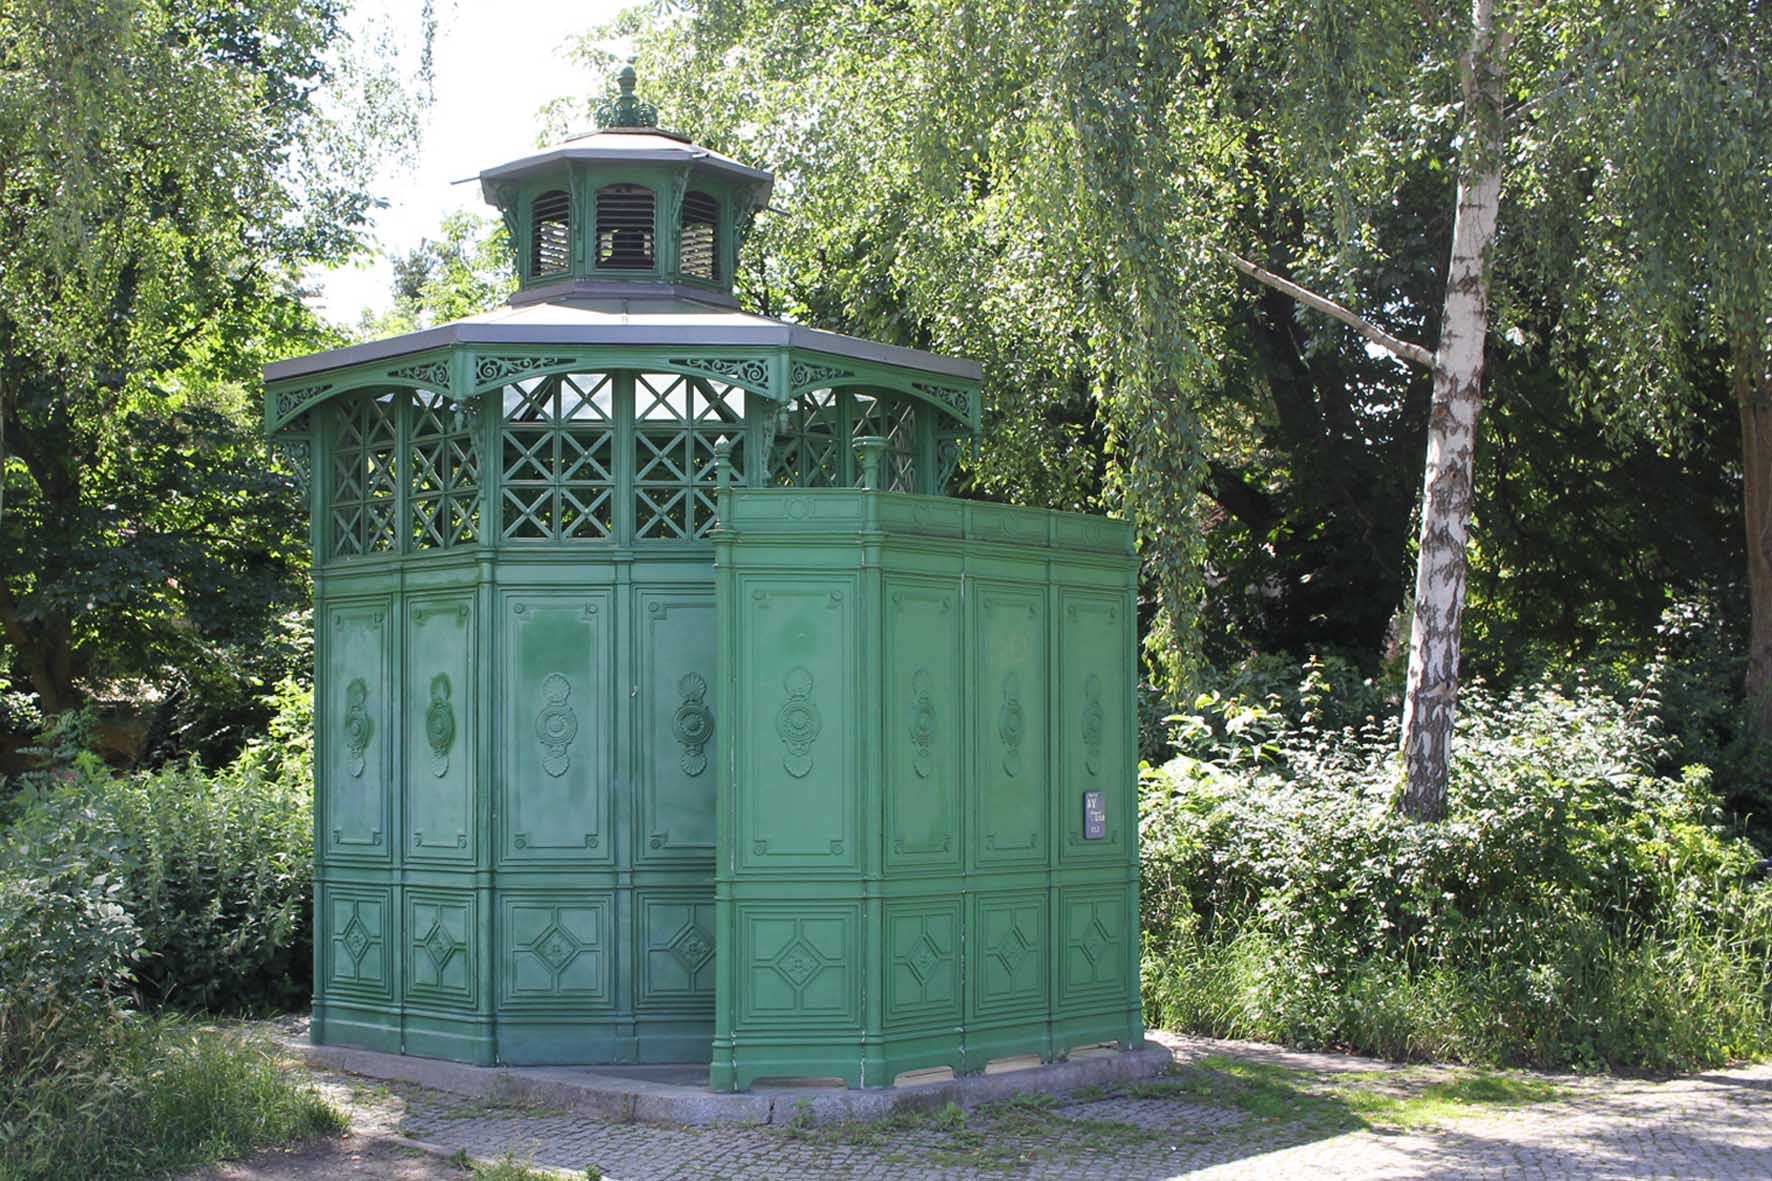 Café Achteck - Alt-Mariendorf - an example of Berlin's classic 19th century green cast iron public toilets